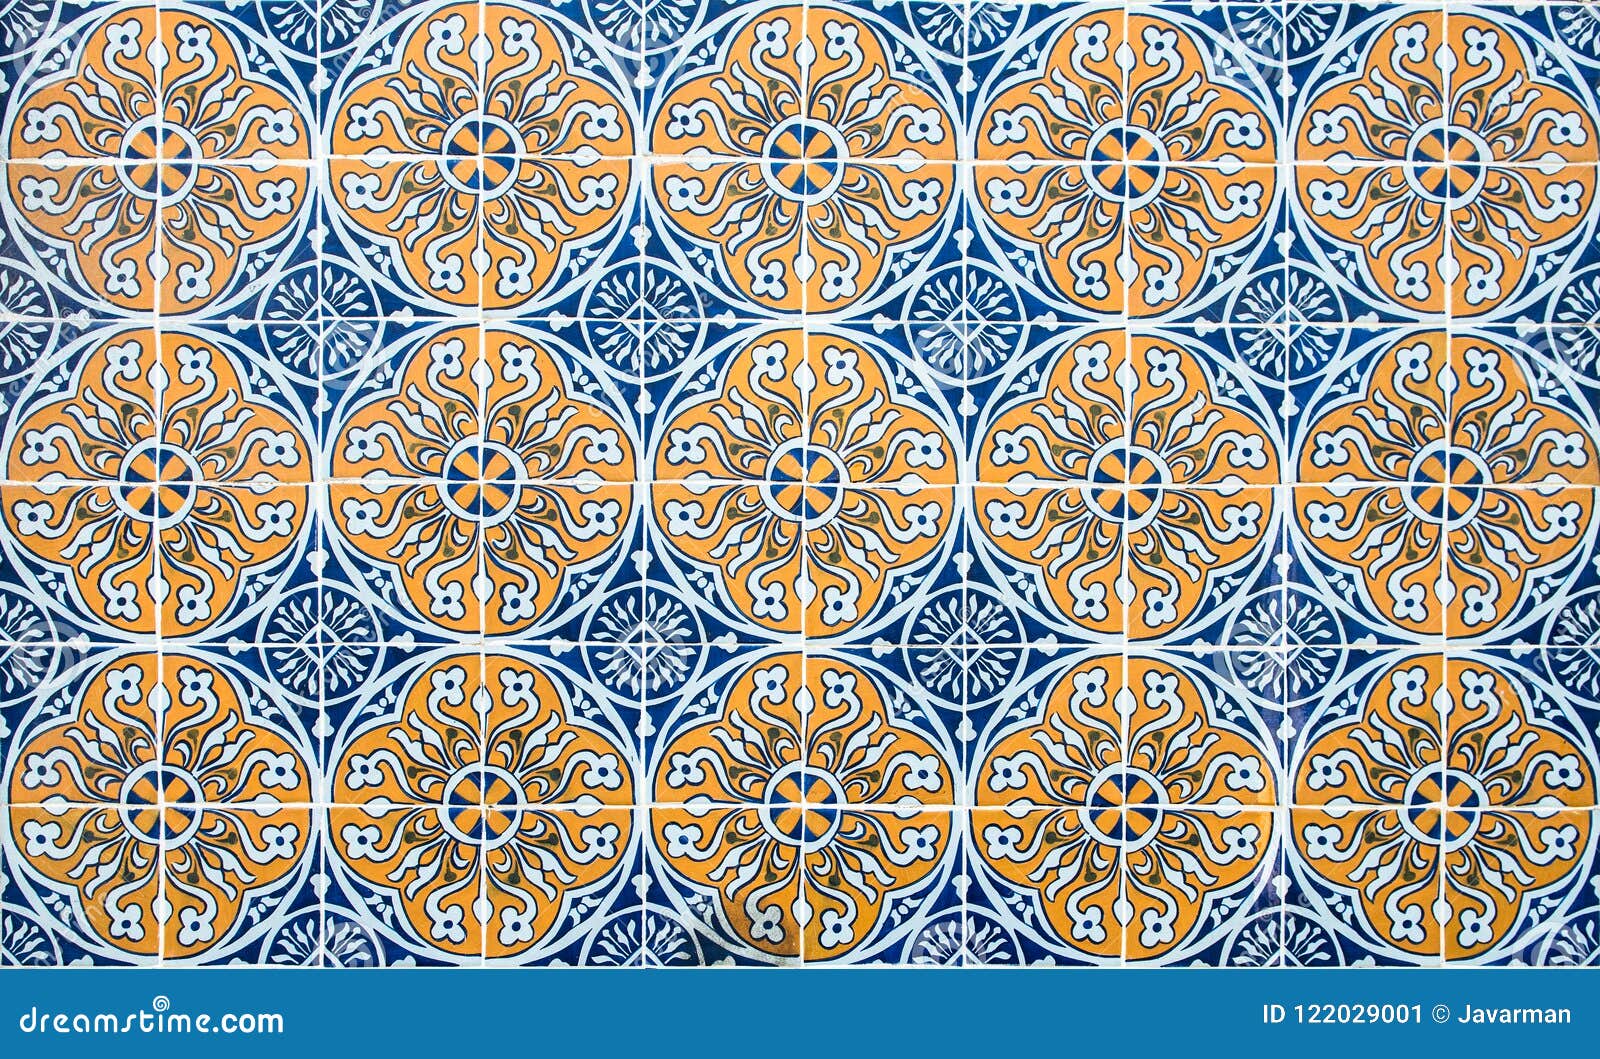 vintage azulejos, traditional portuguese tiles